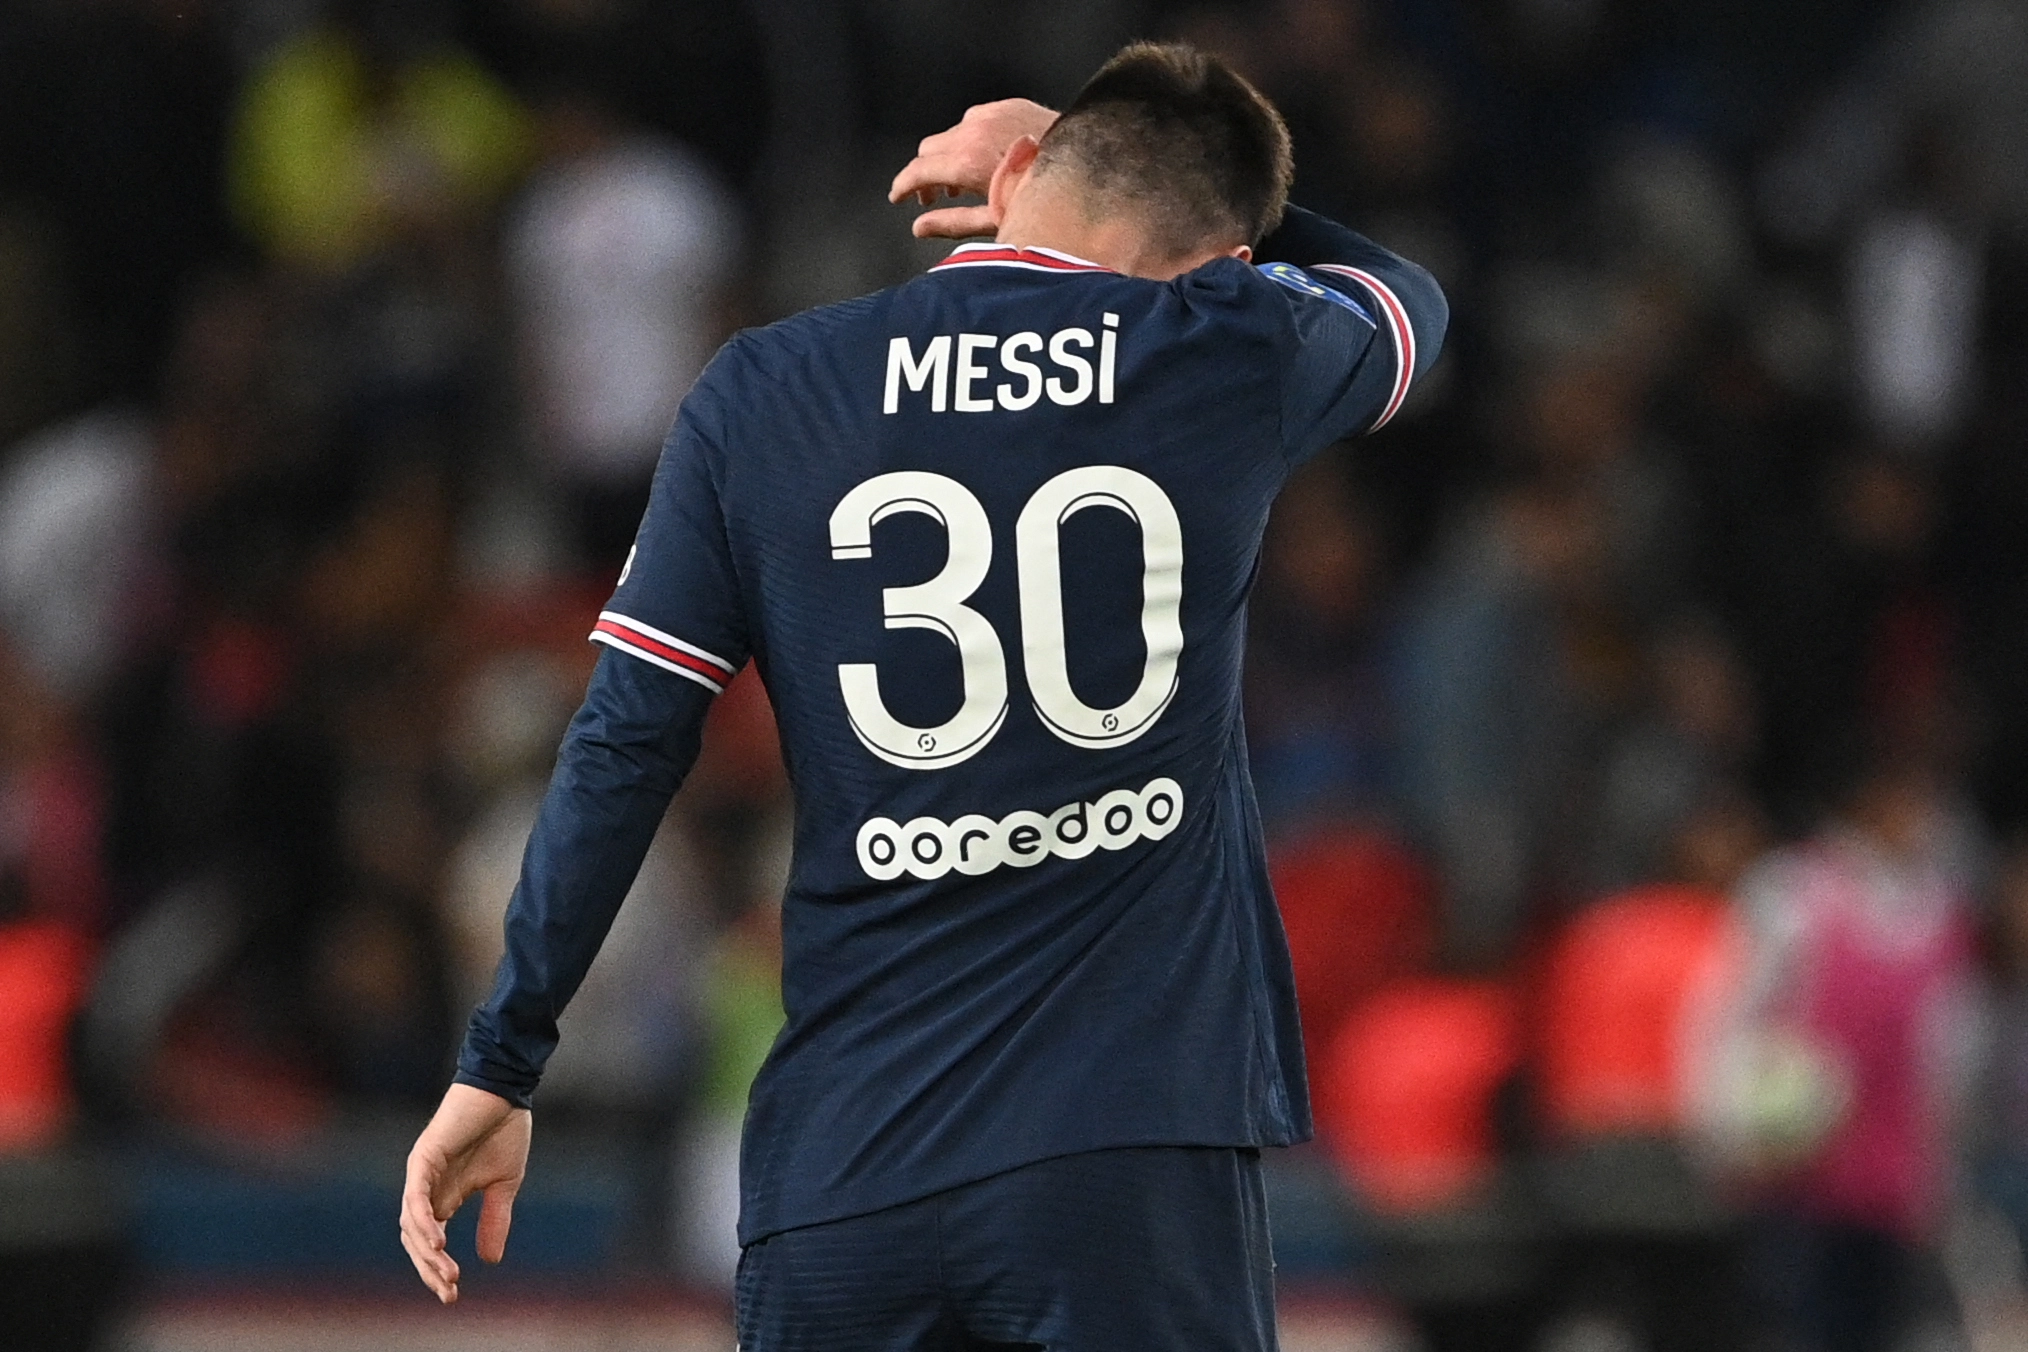 Messi to play last game for PSG : پی ایس جی سے لیونل میسی کا رشتہ ختم،ہفتہ کو کھیلیں گے آخری میچ